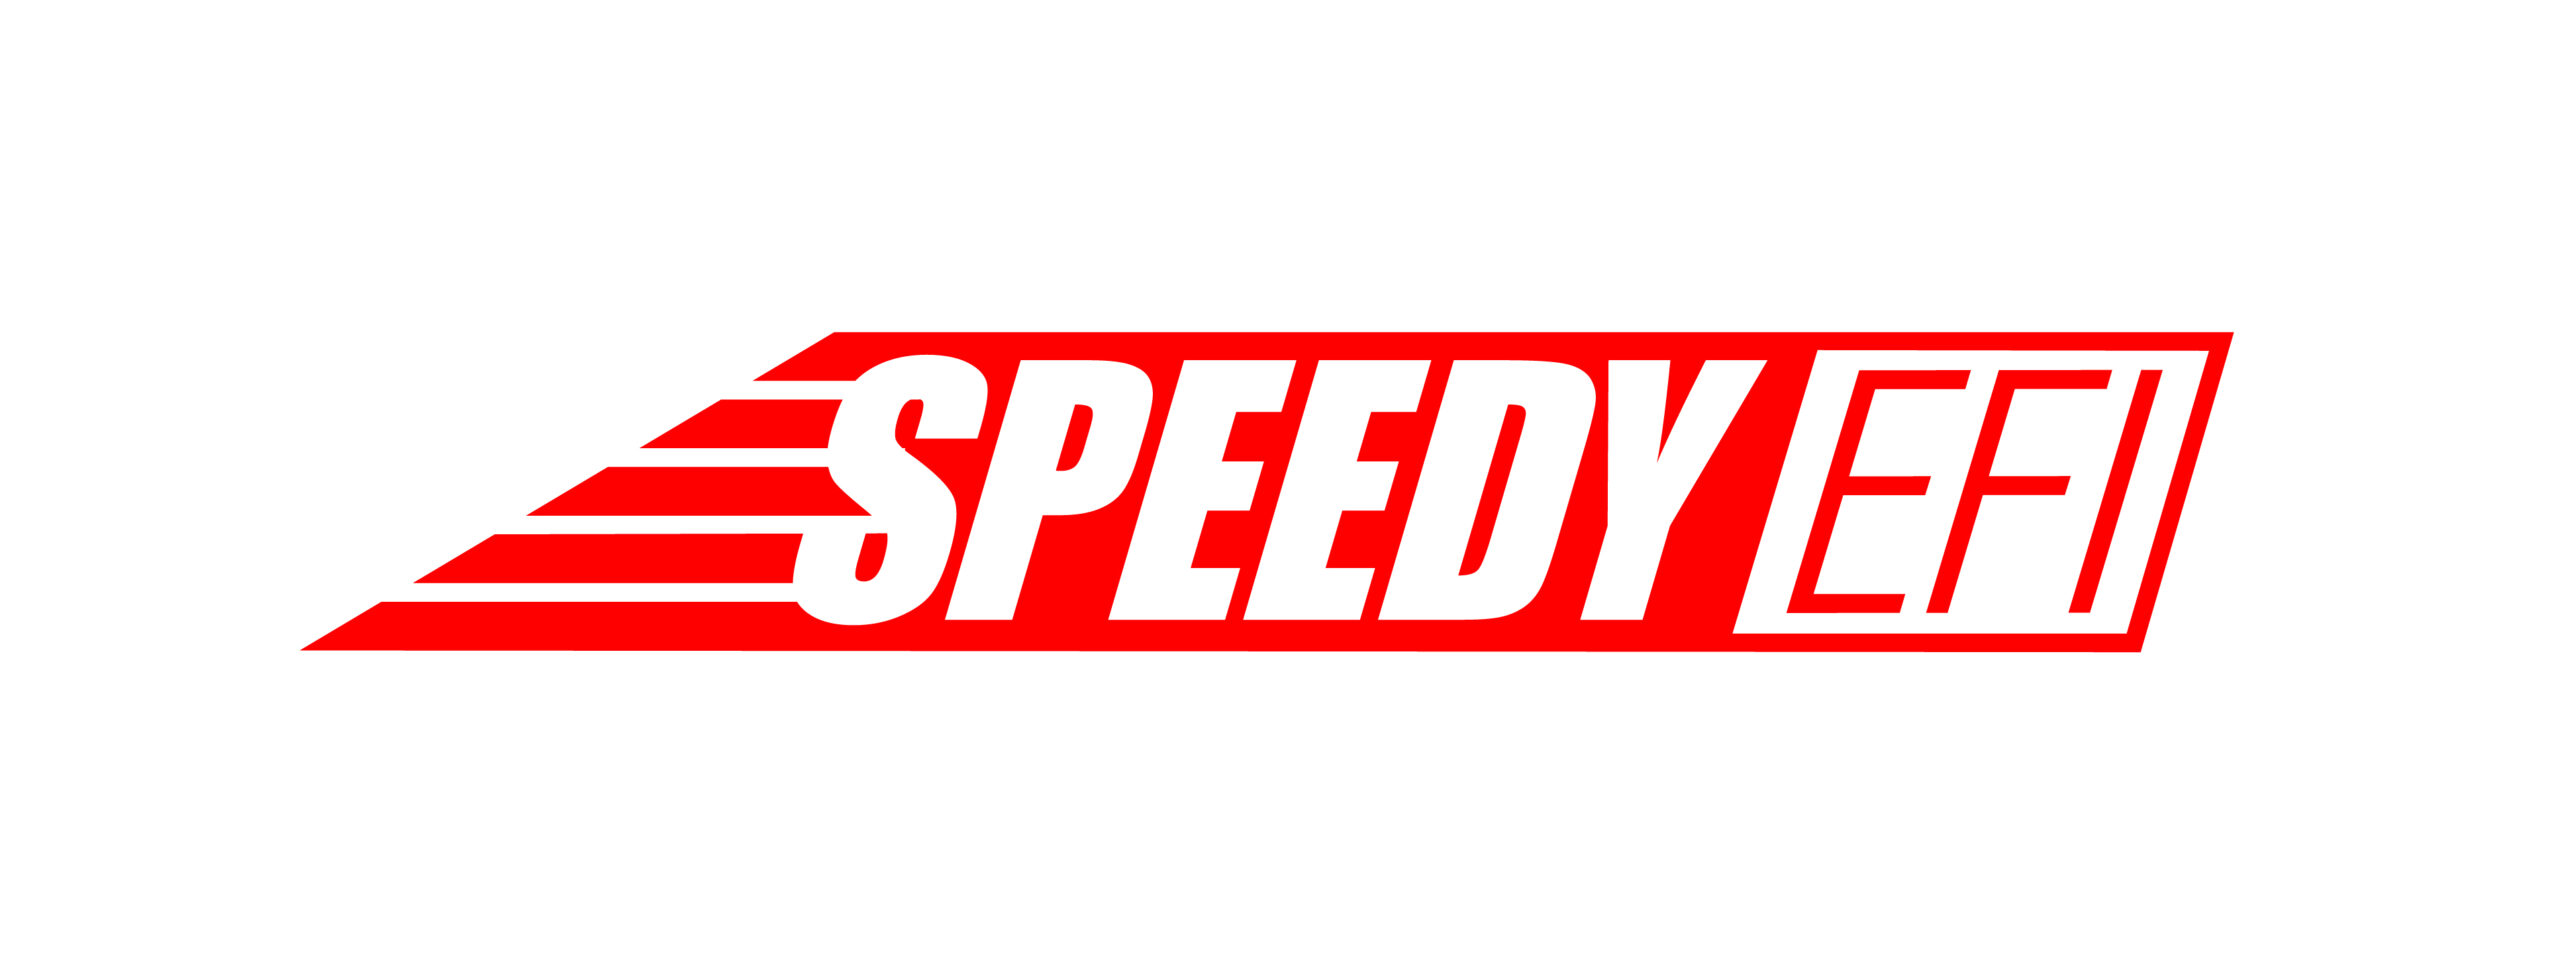 SpeedyEFI_Logo_Red